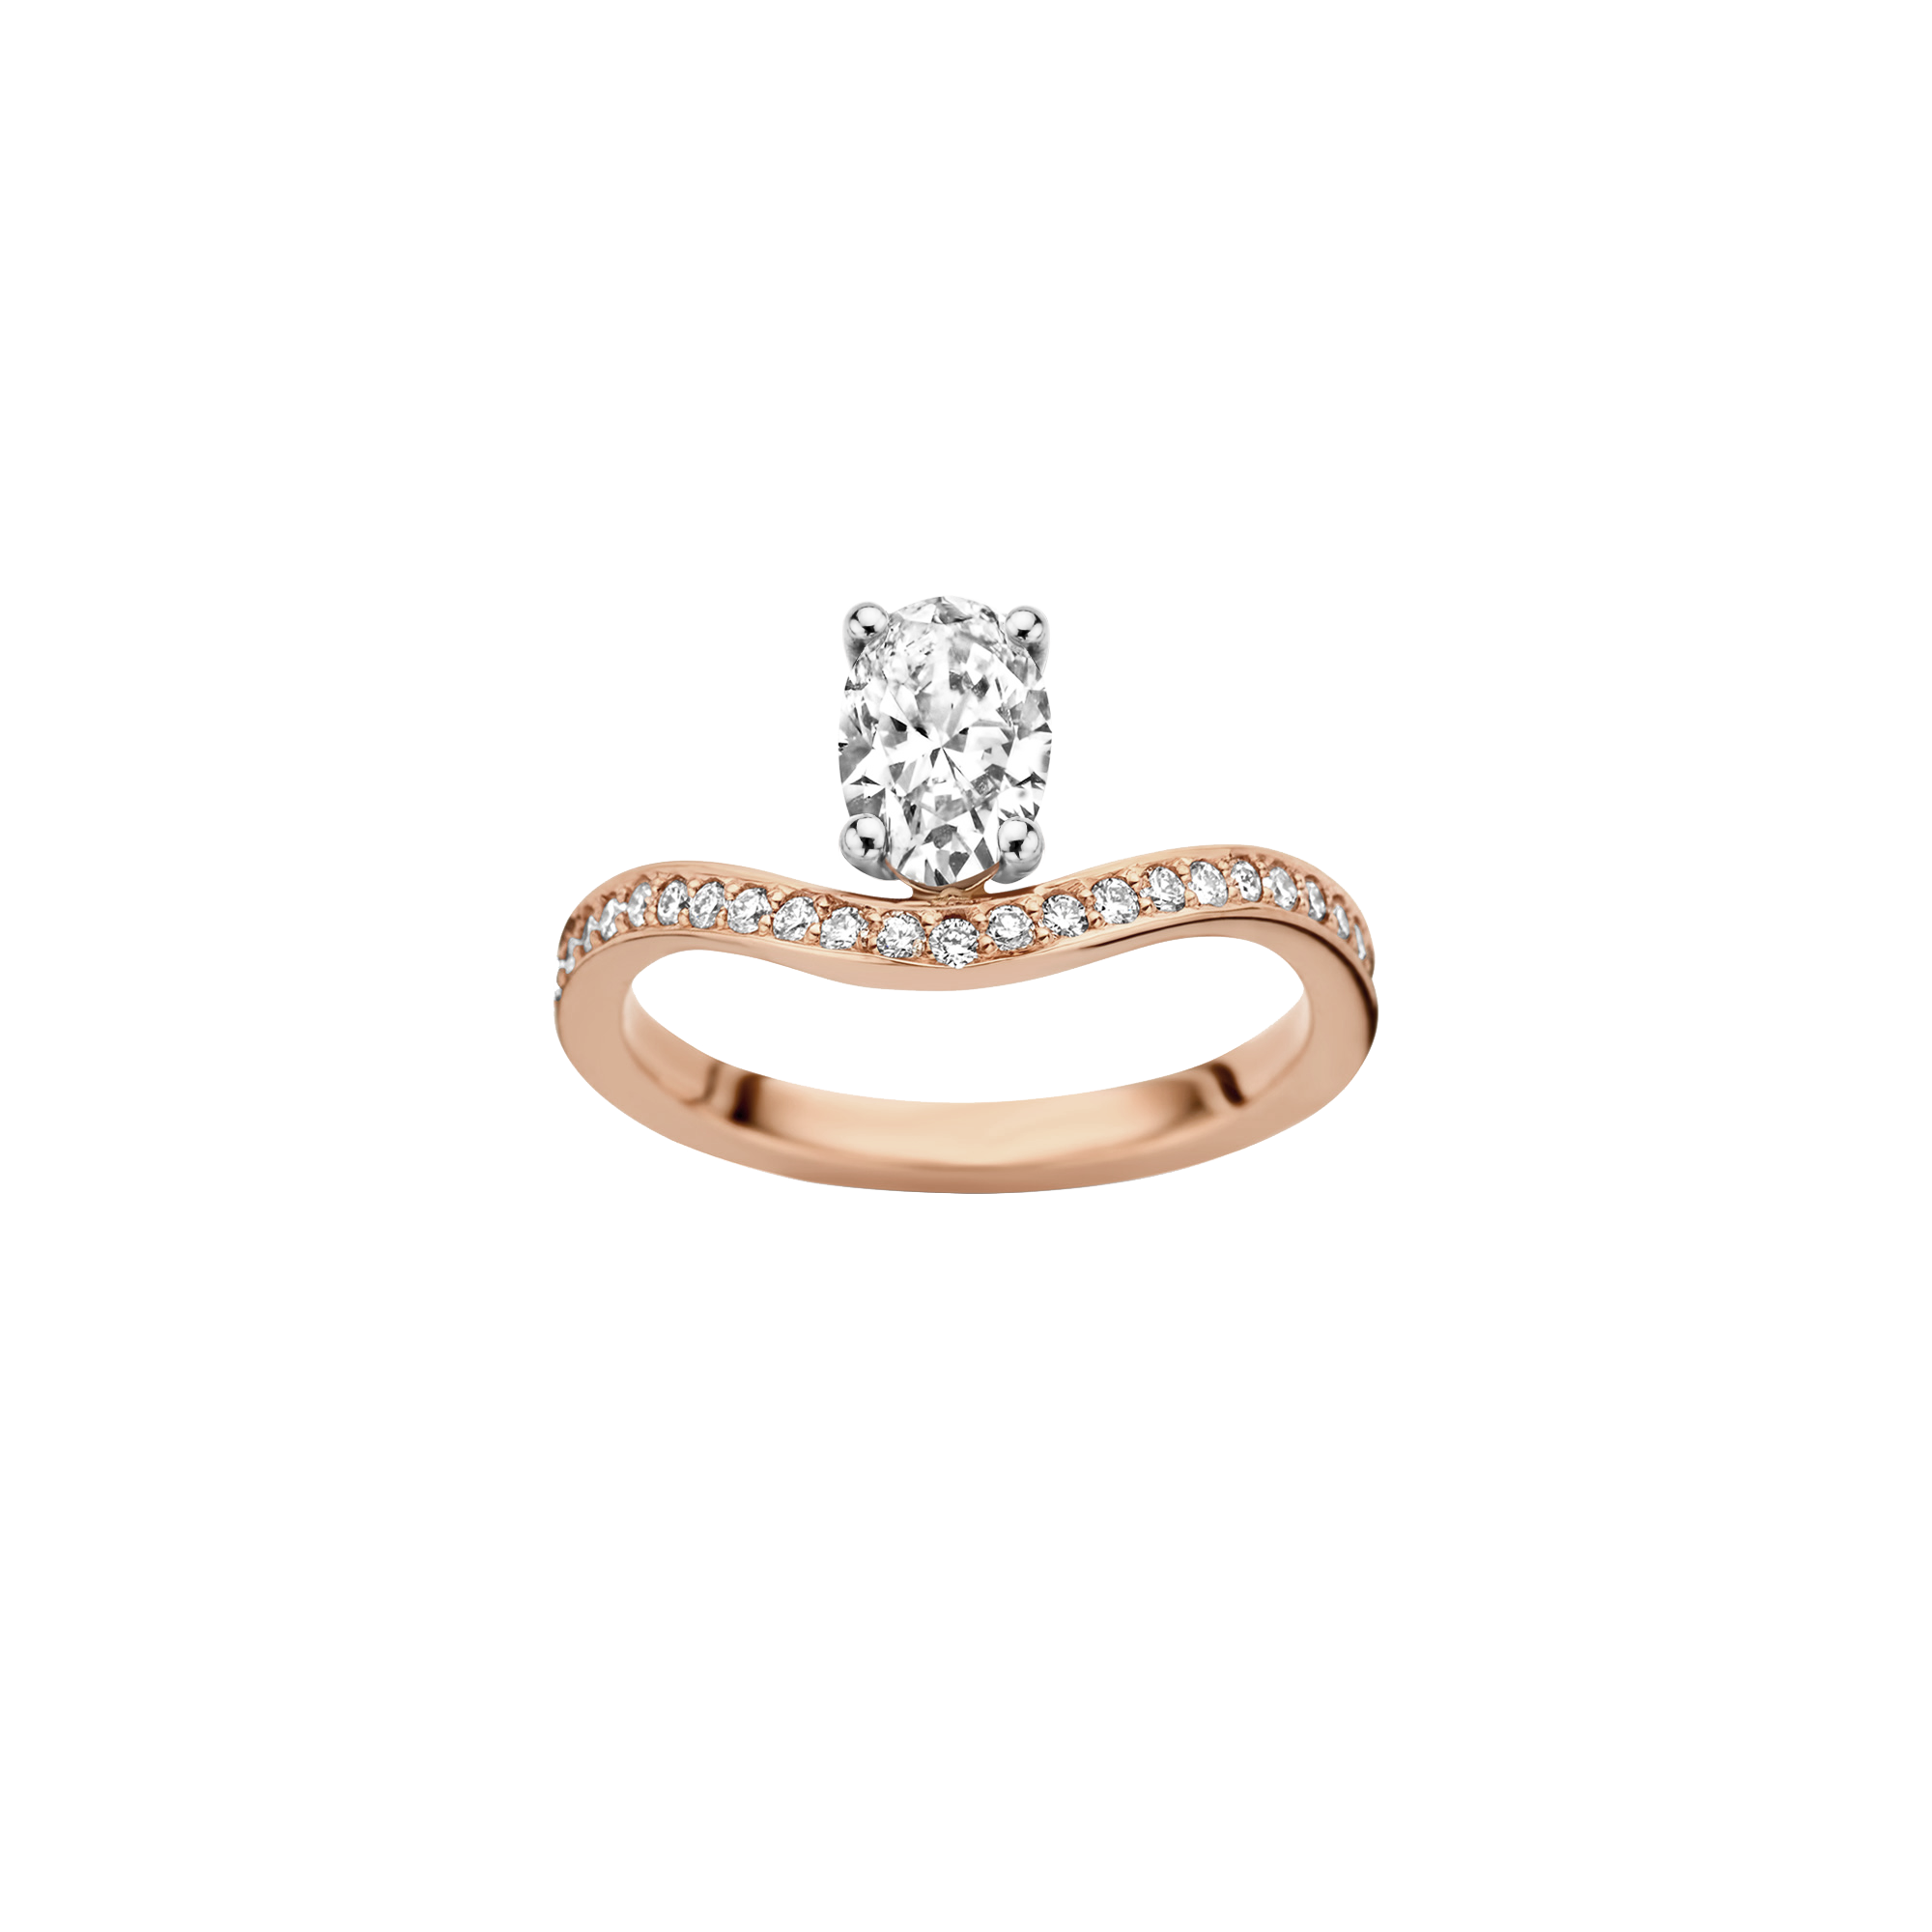 Helena engagement ring packshot - rose gold